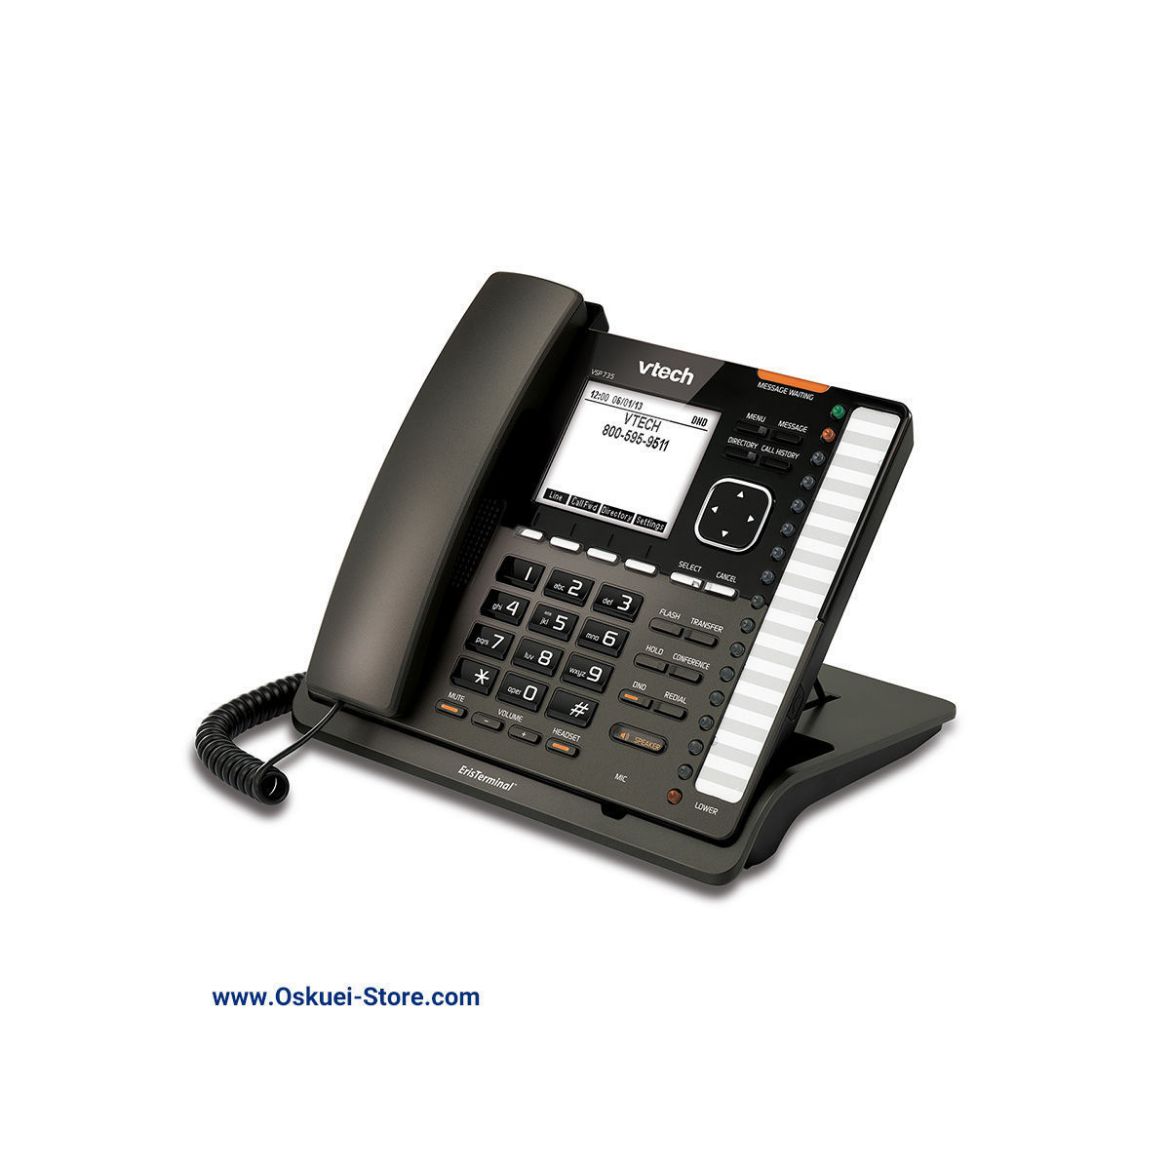 VTech VSP735 VoIP SIP Telephone Black Right